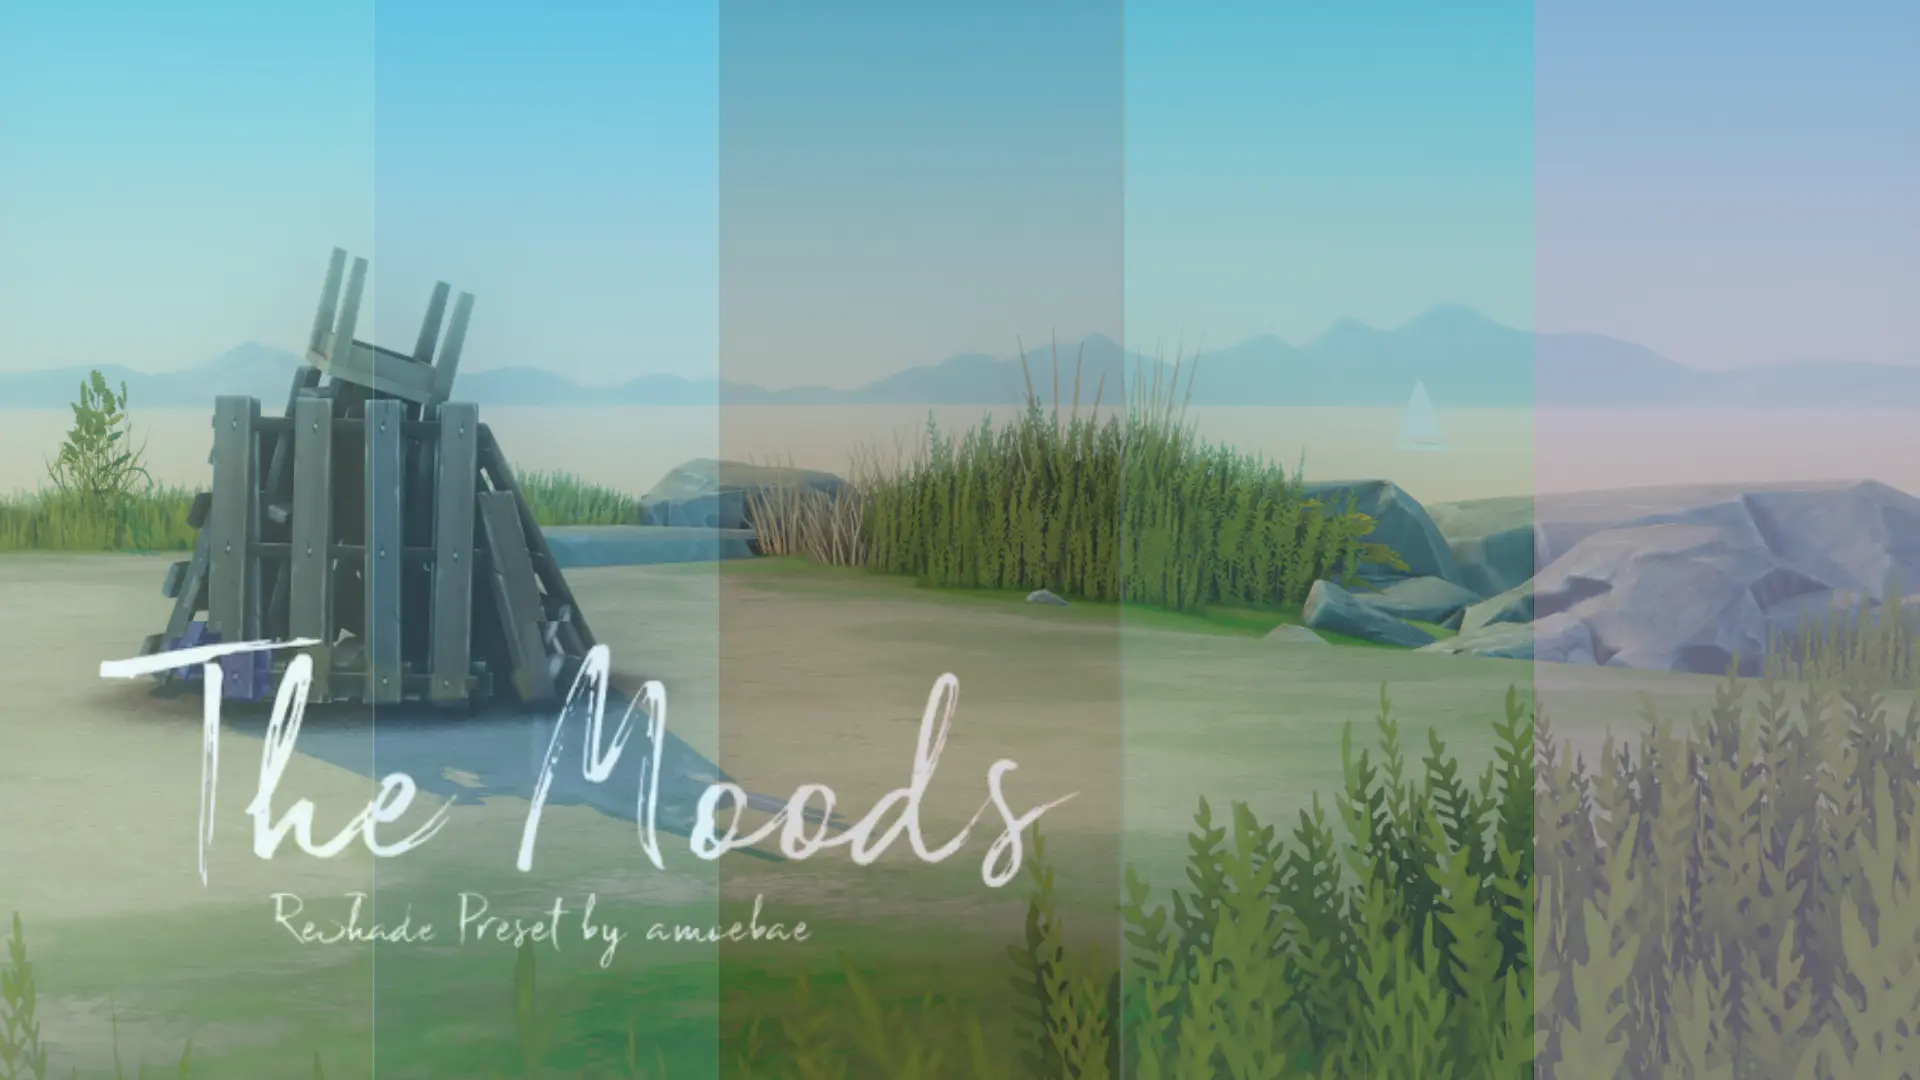 The Moods Sims 4 Reshade Preset by amoebae